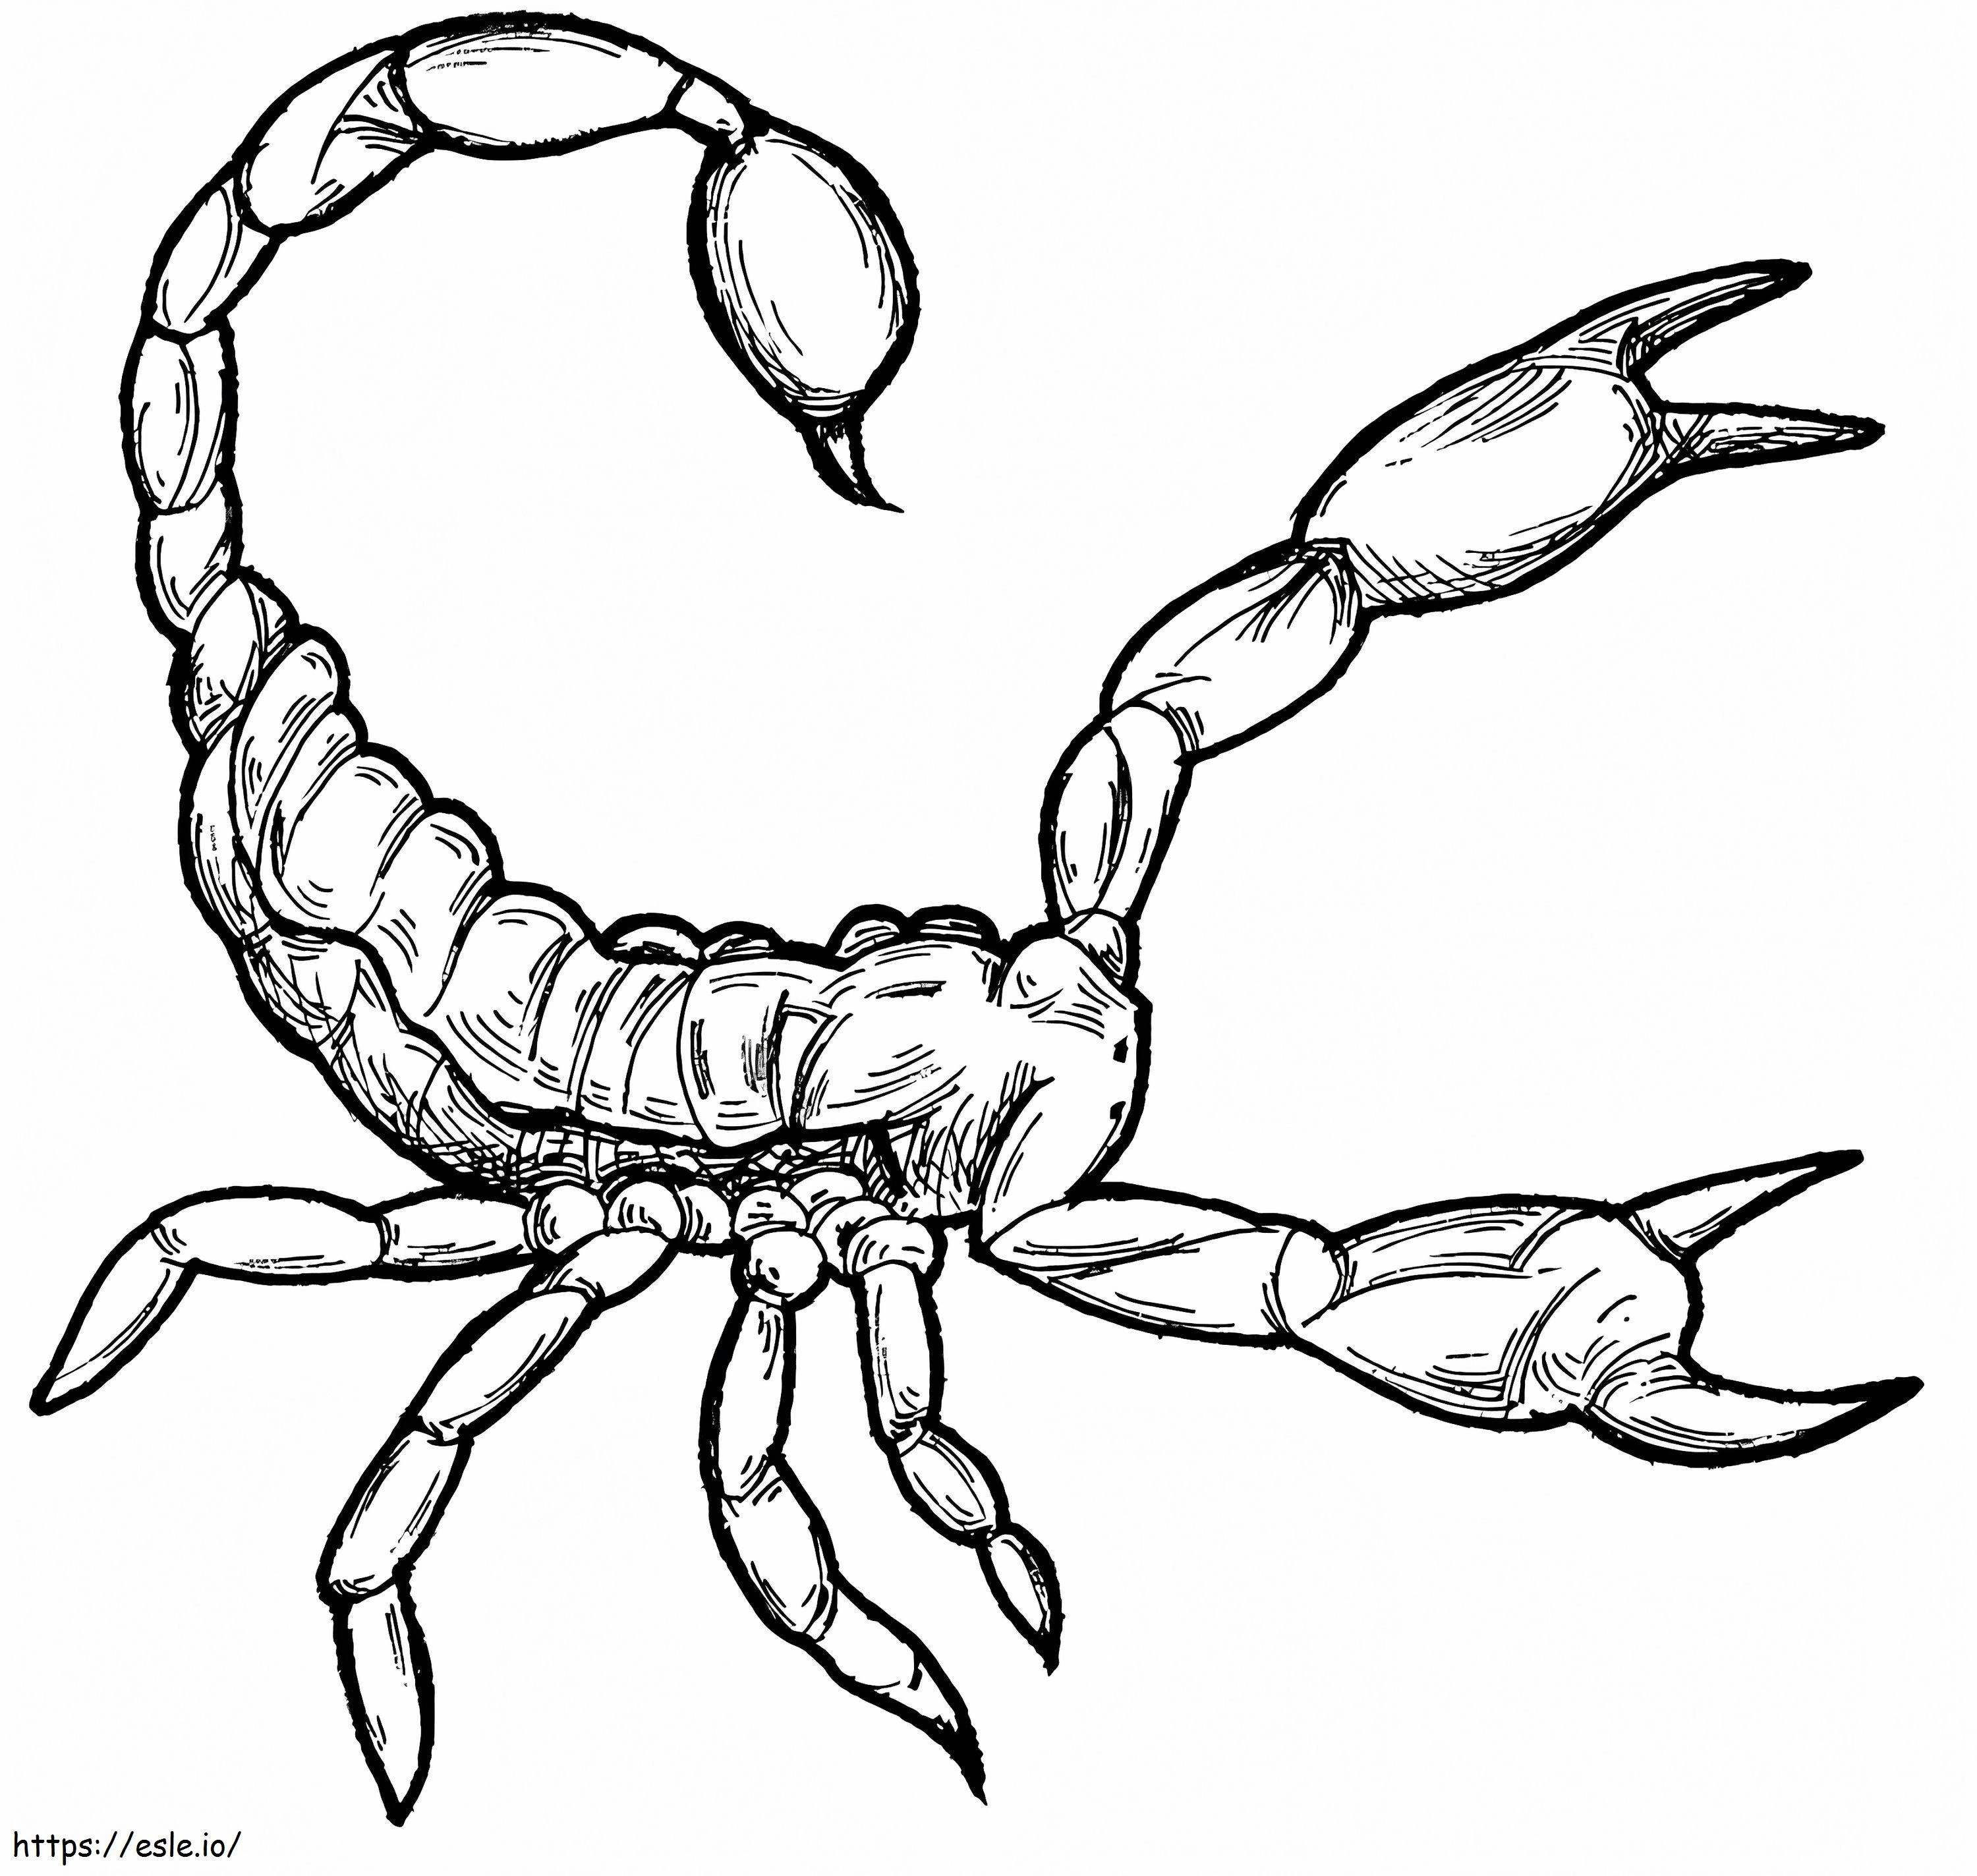 Coloriage Scorpion 1 à imprimer dessin